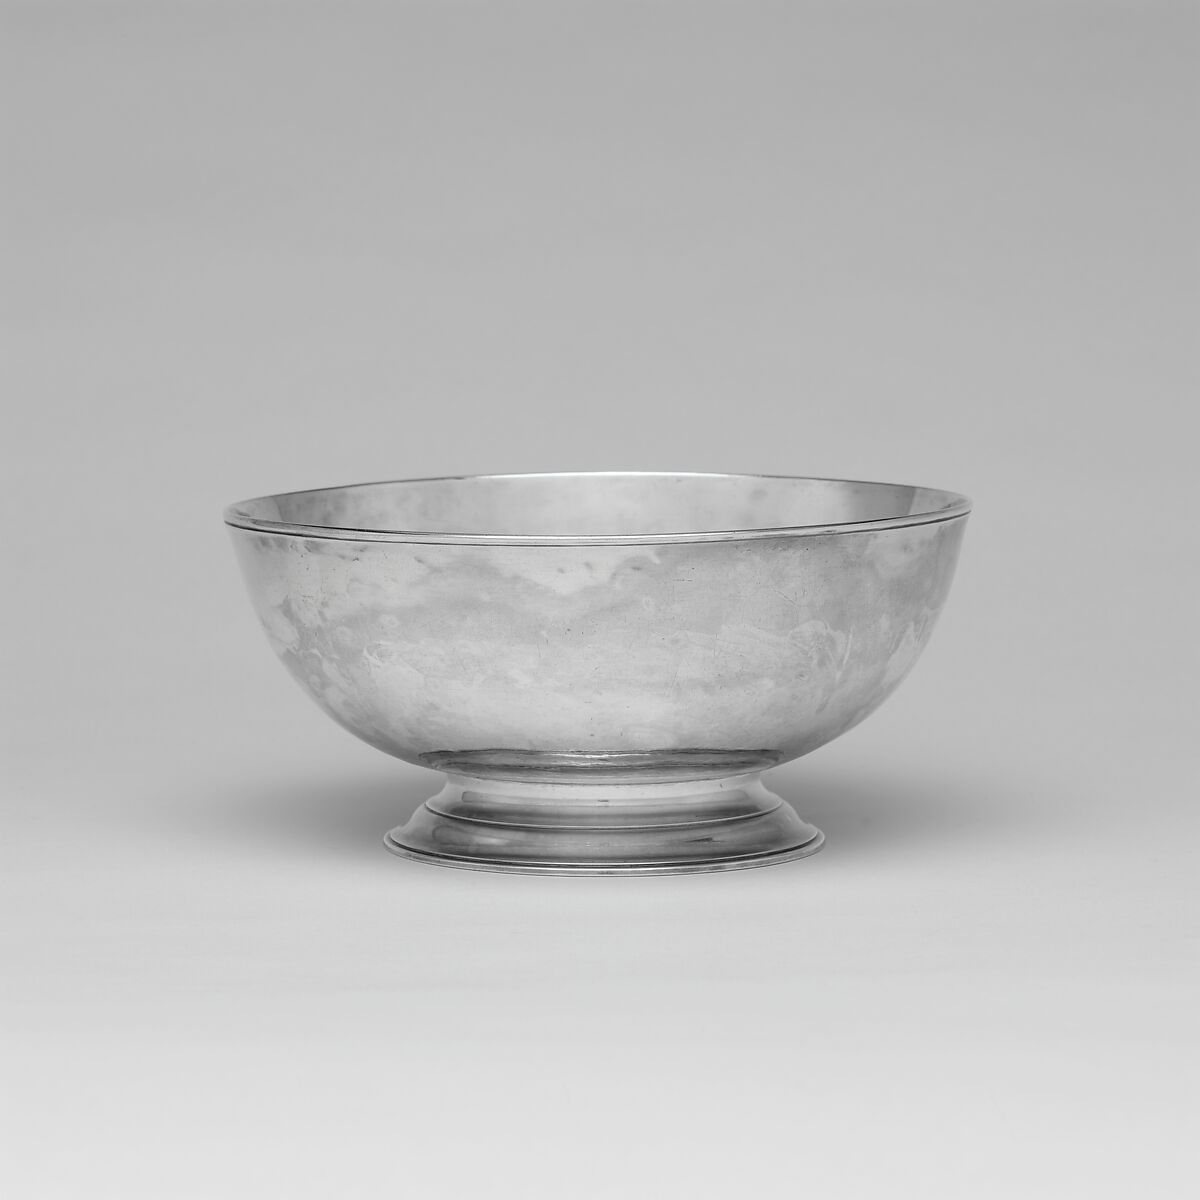 Punch Bowl, Ephraim Brasher (American, baptized 1744–1810), Silver, American 